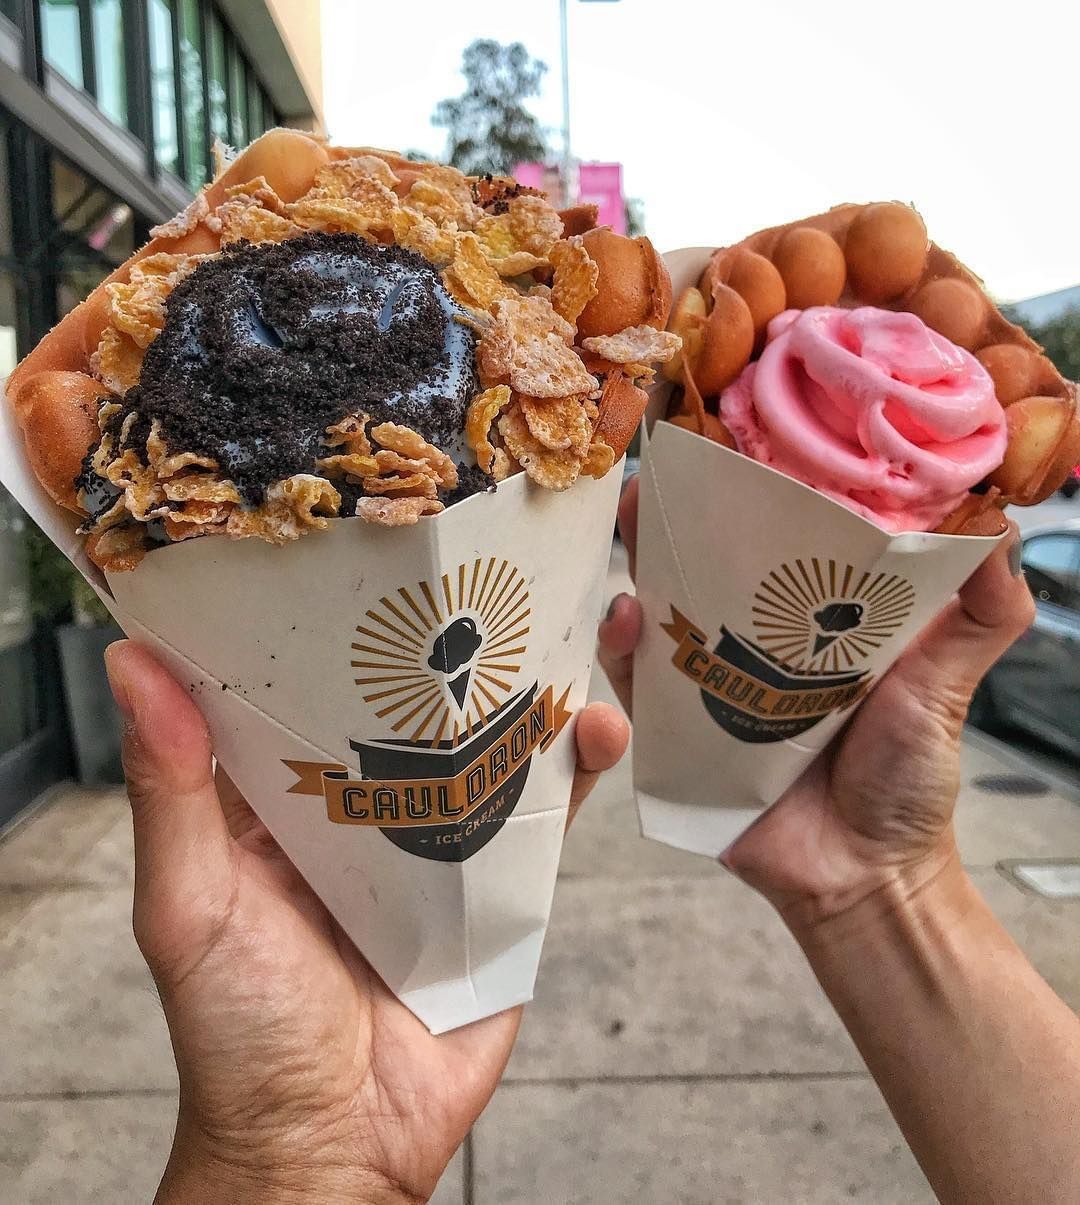 Dallas市 アメリカで人気のパッフルアイスクリーム店がオープン Cauldron Dallajapa Com